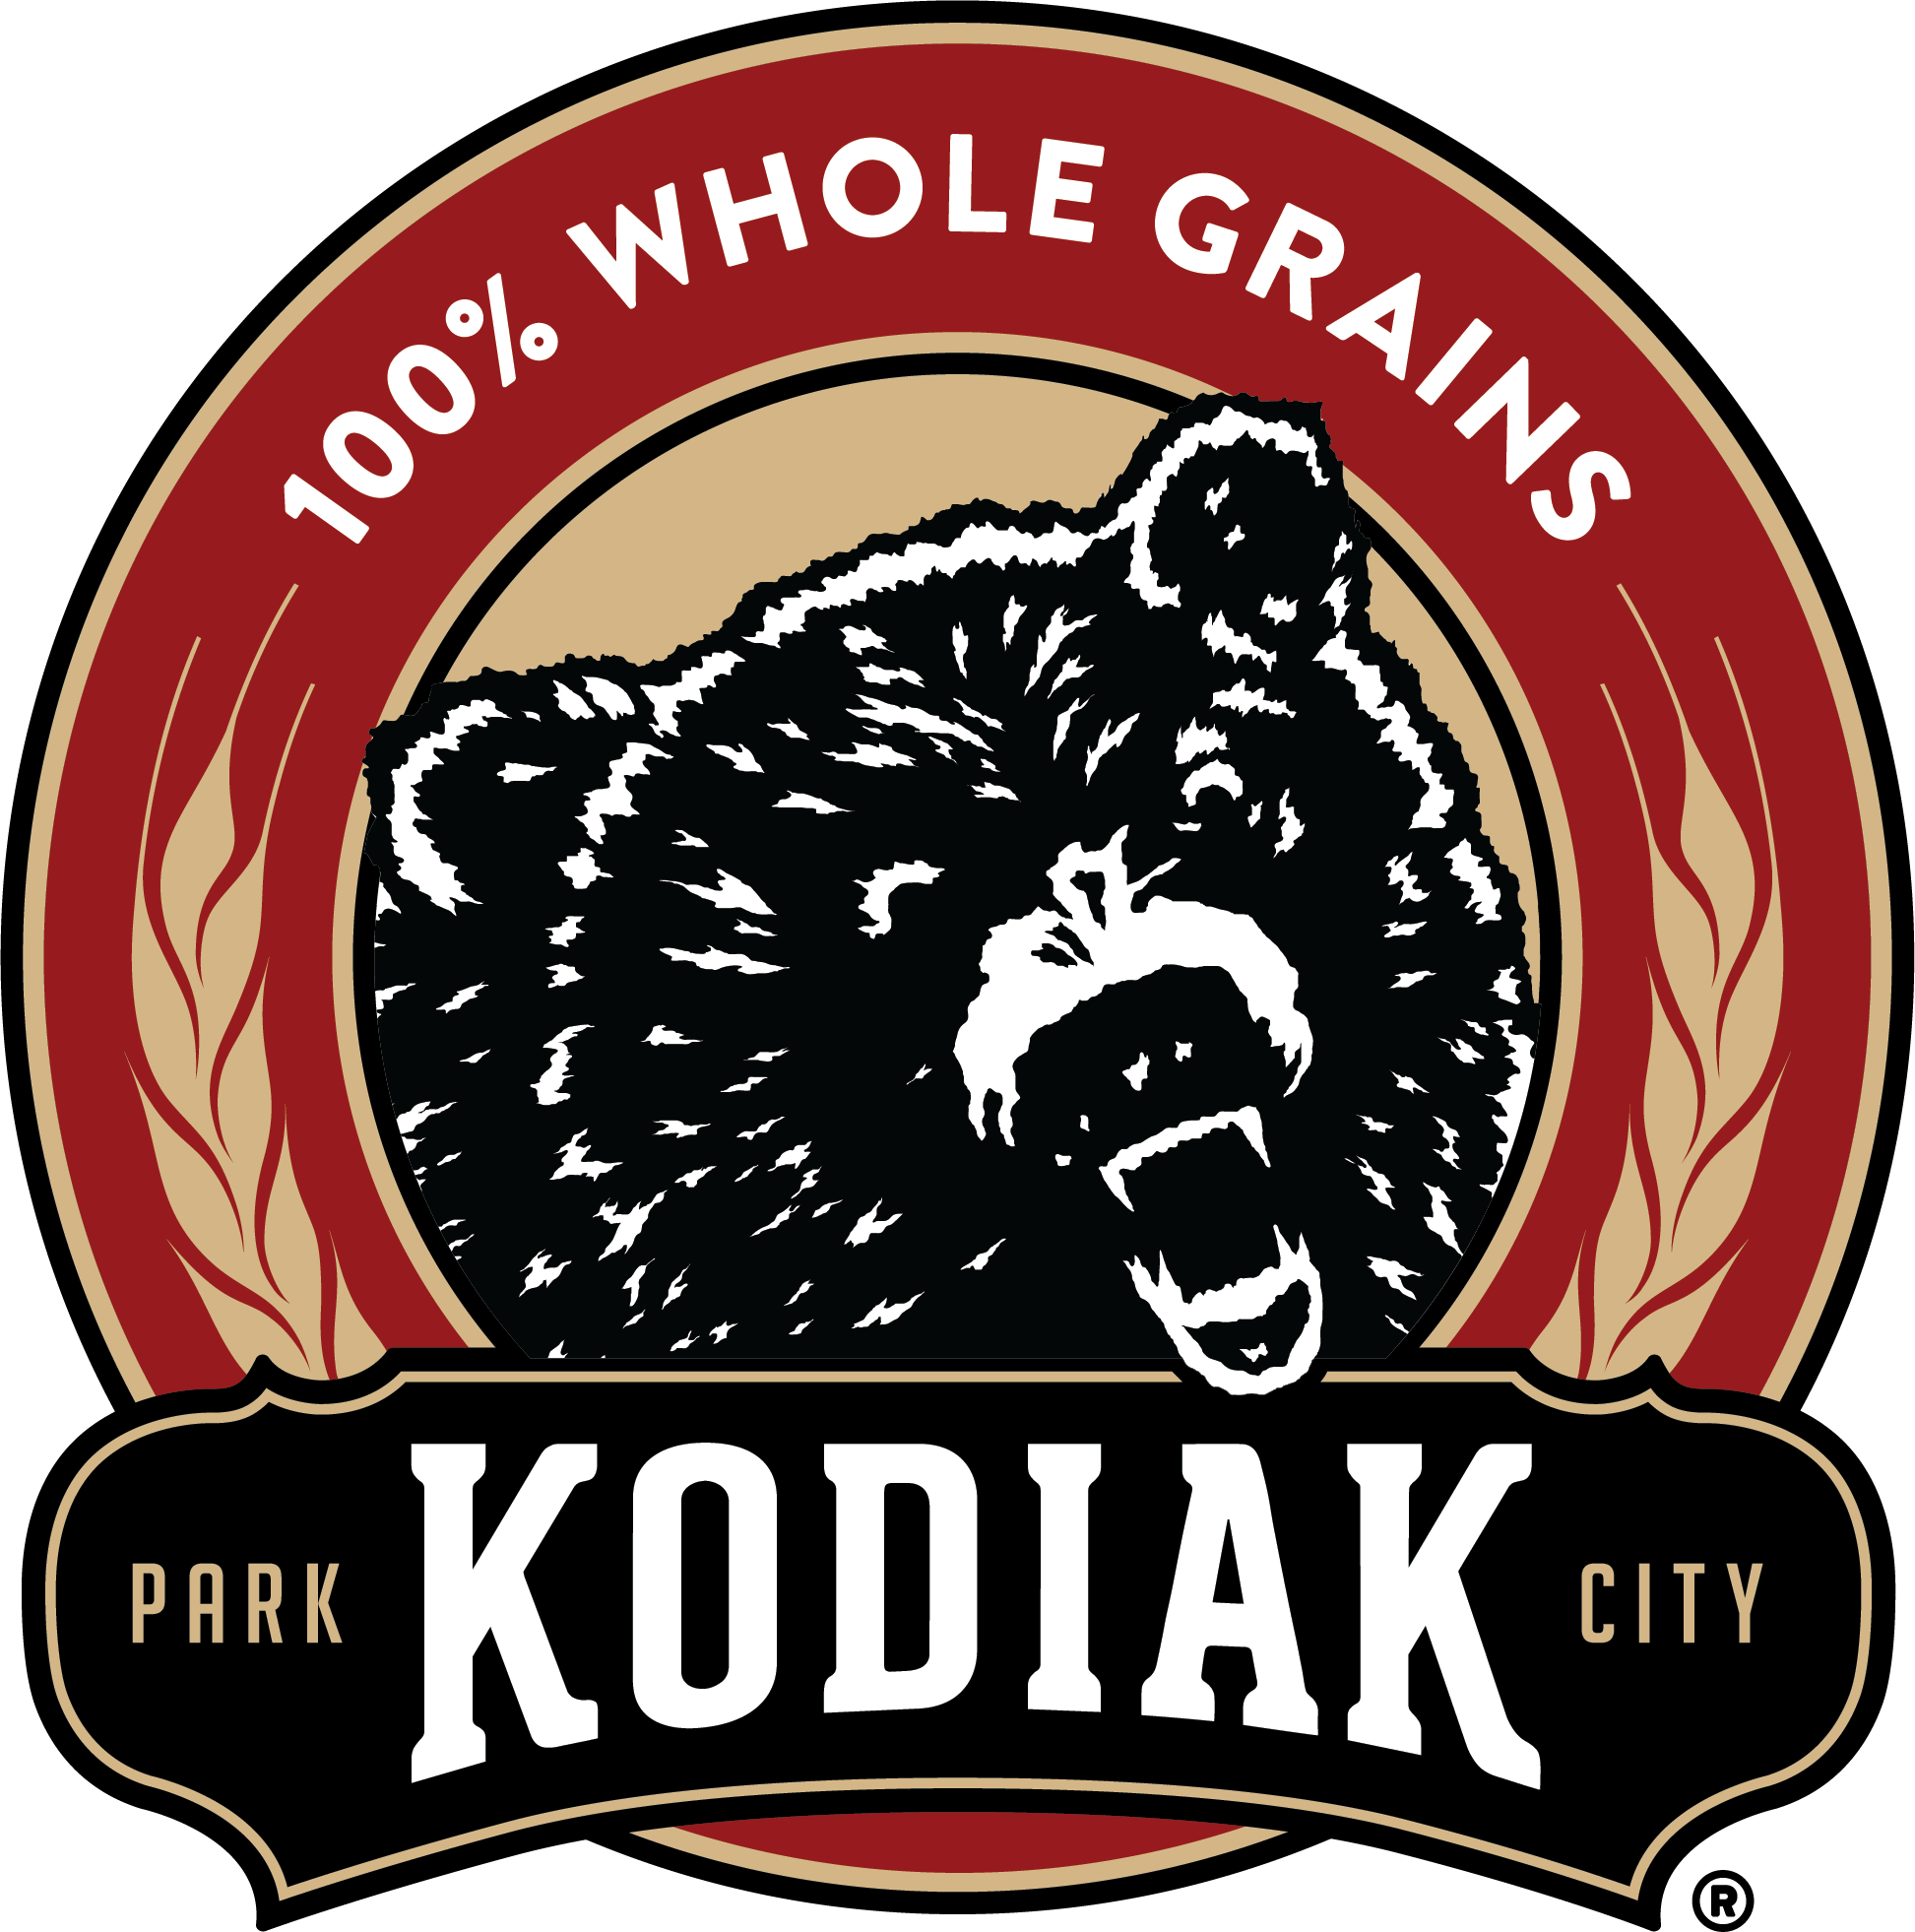 Kodiak logo v2.png